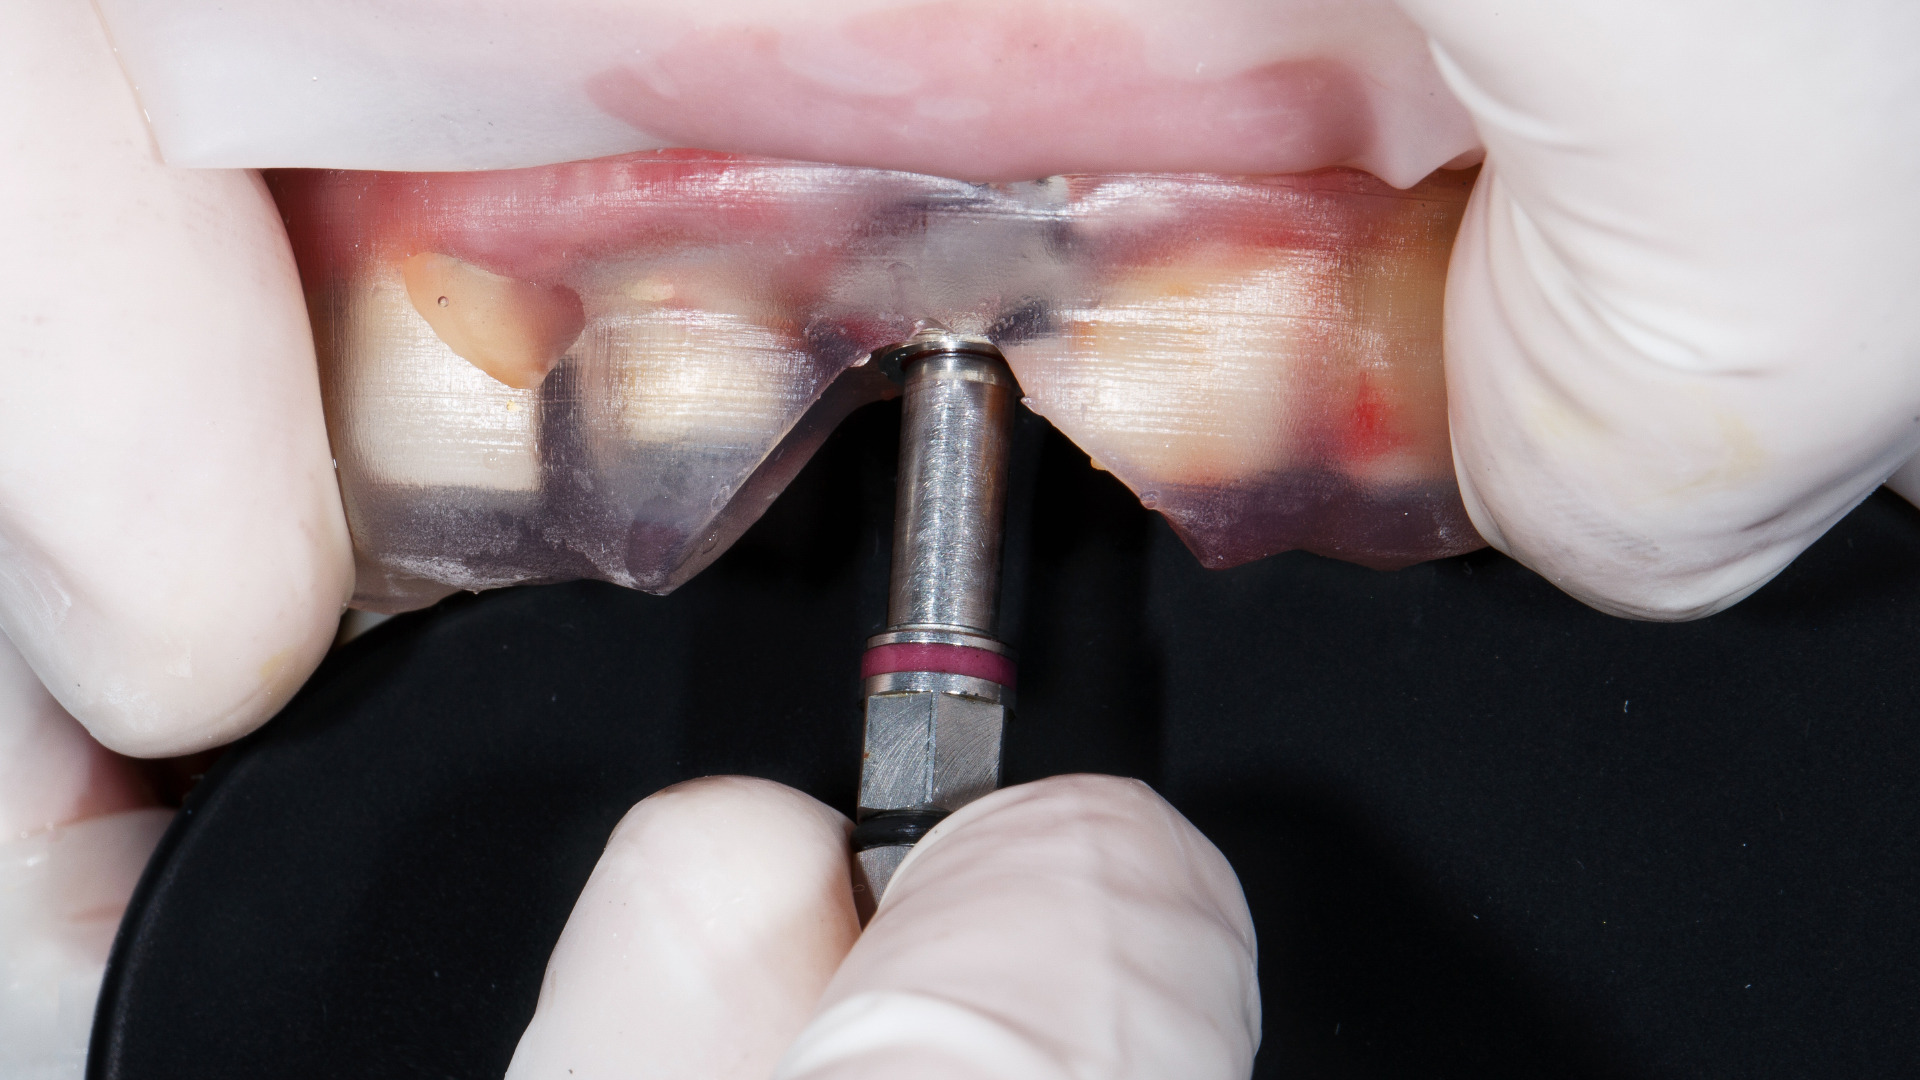 a dental surgeon places dental implants